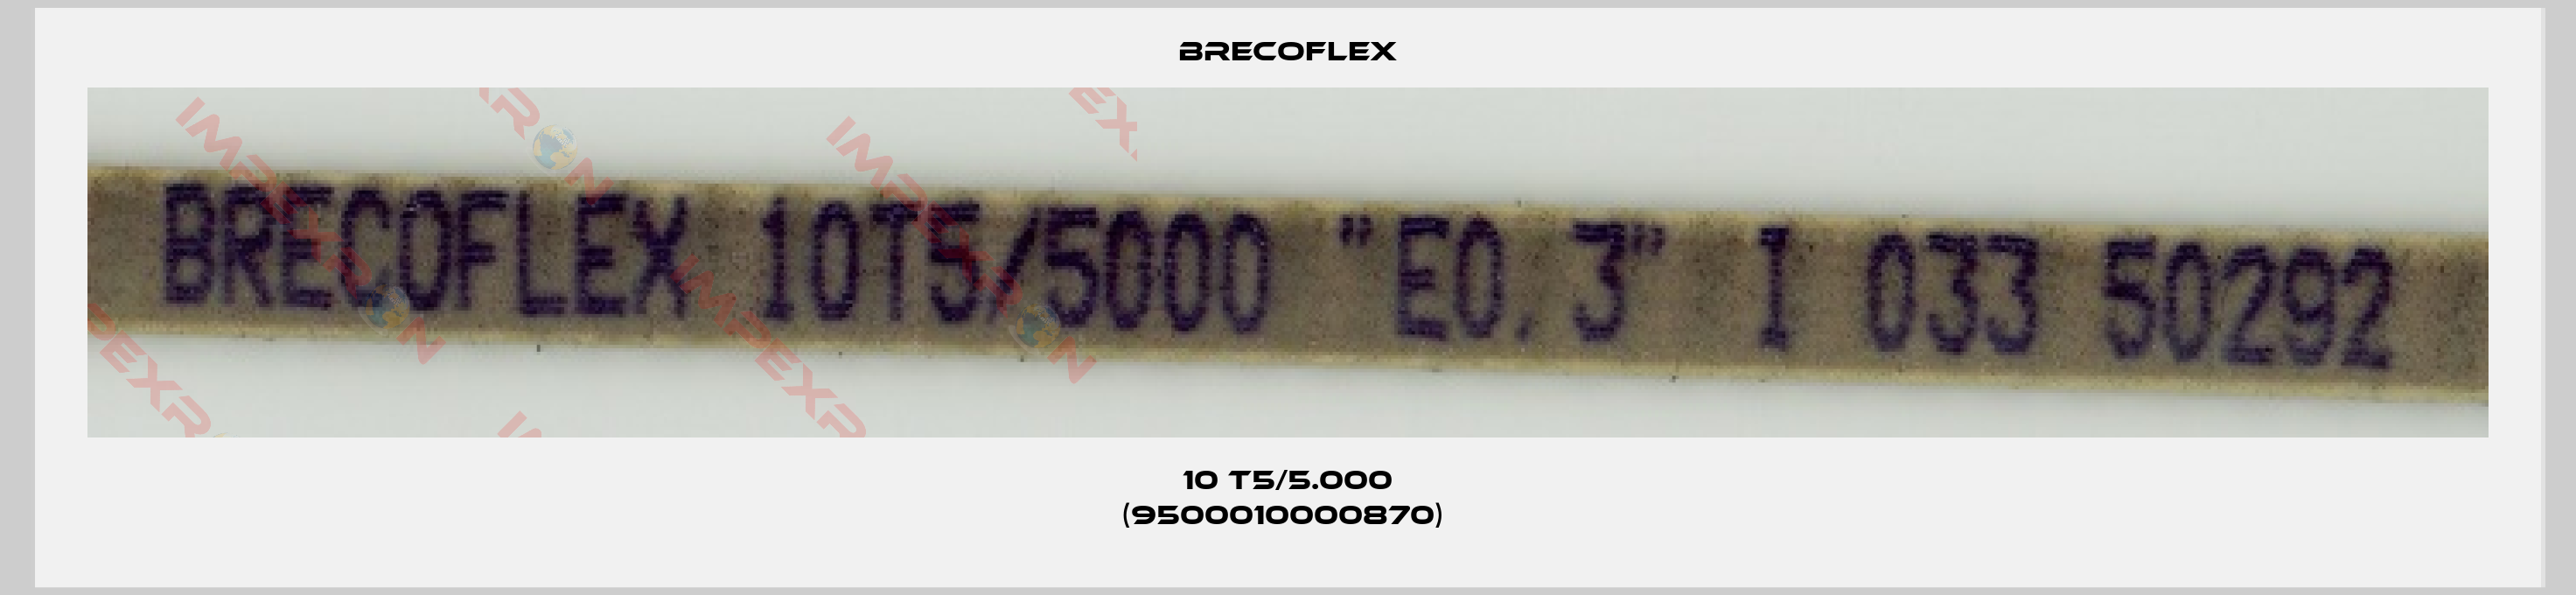 Brecoflex-10 T5/5.000 (9500010000870) 